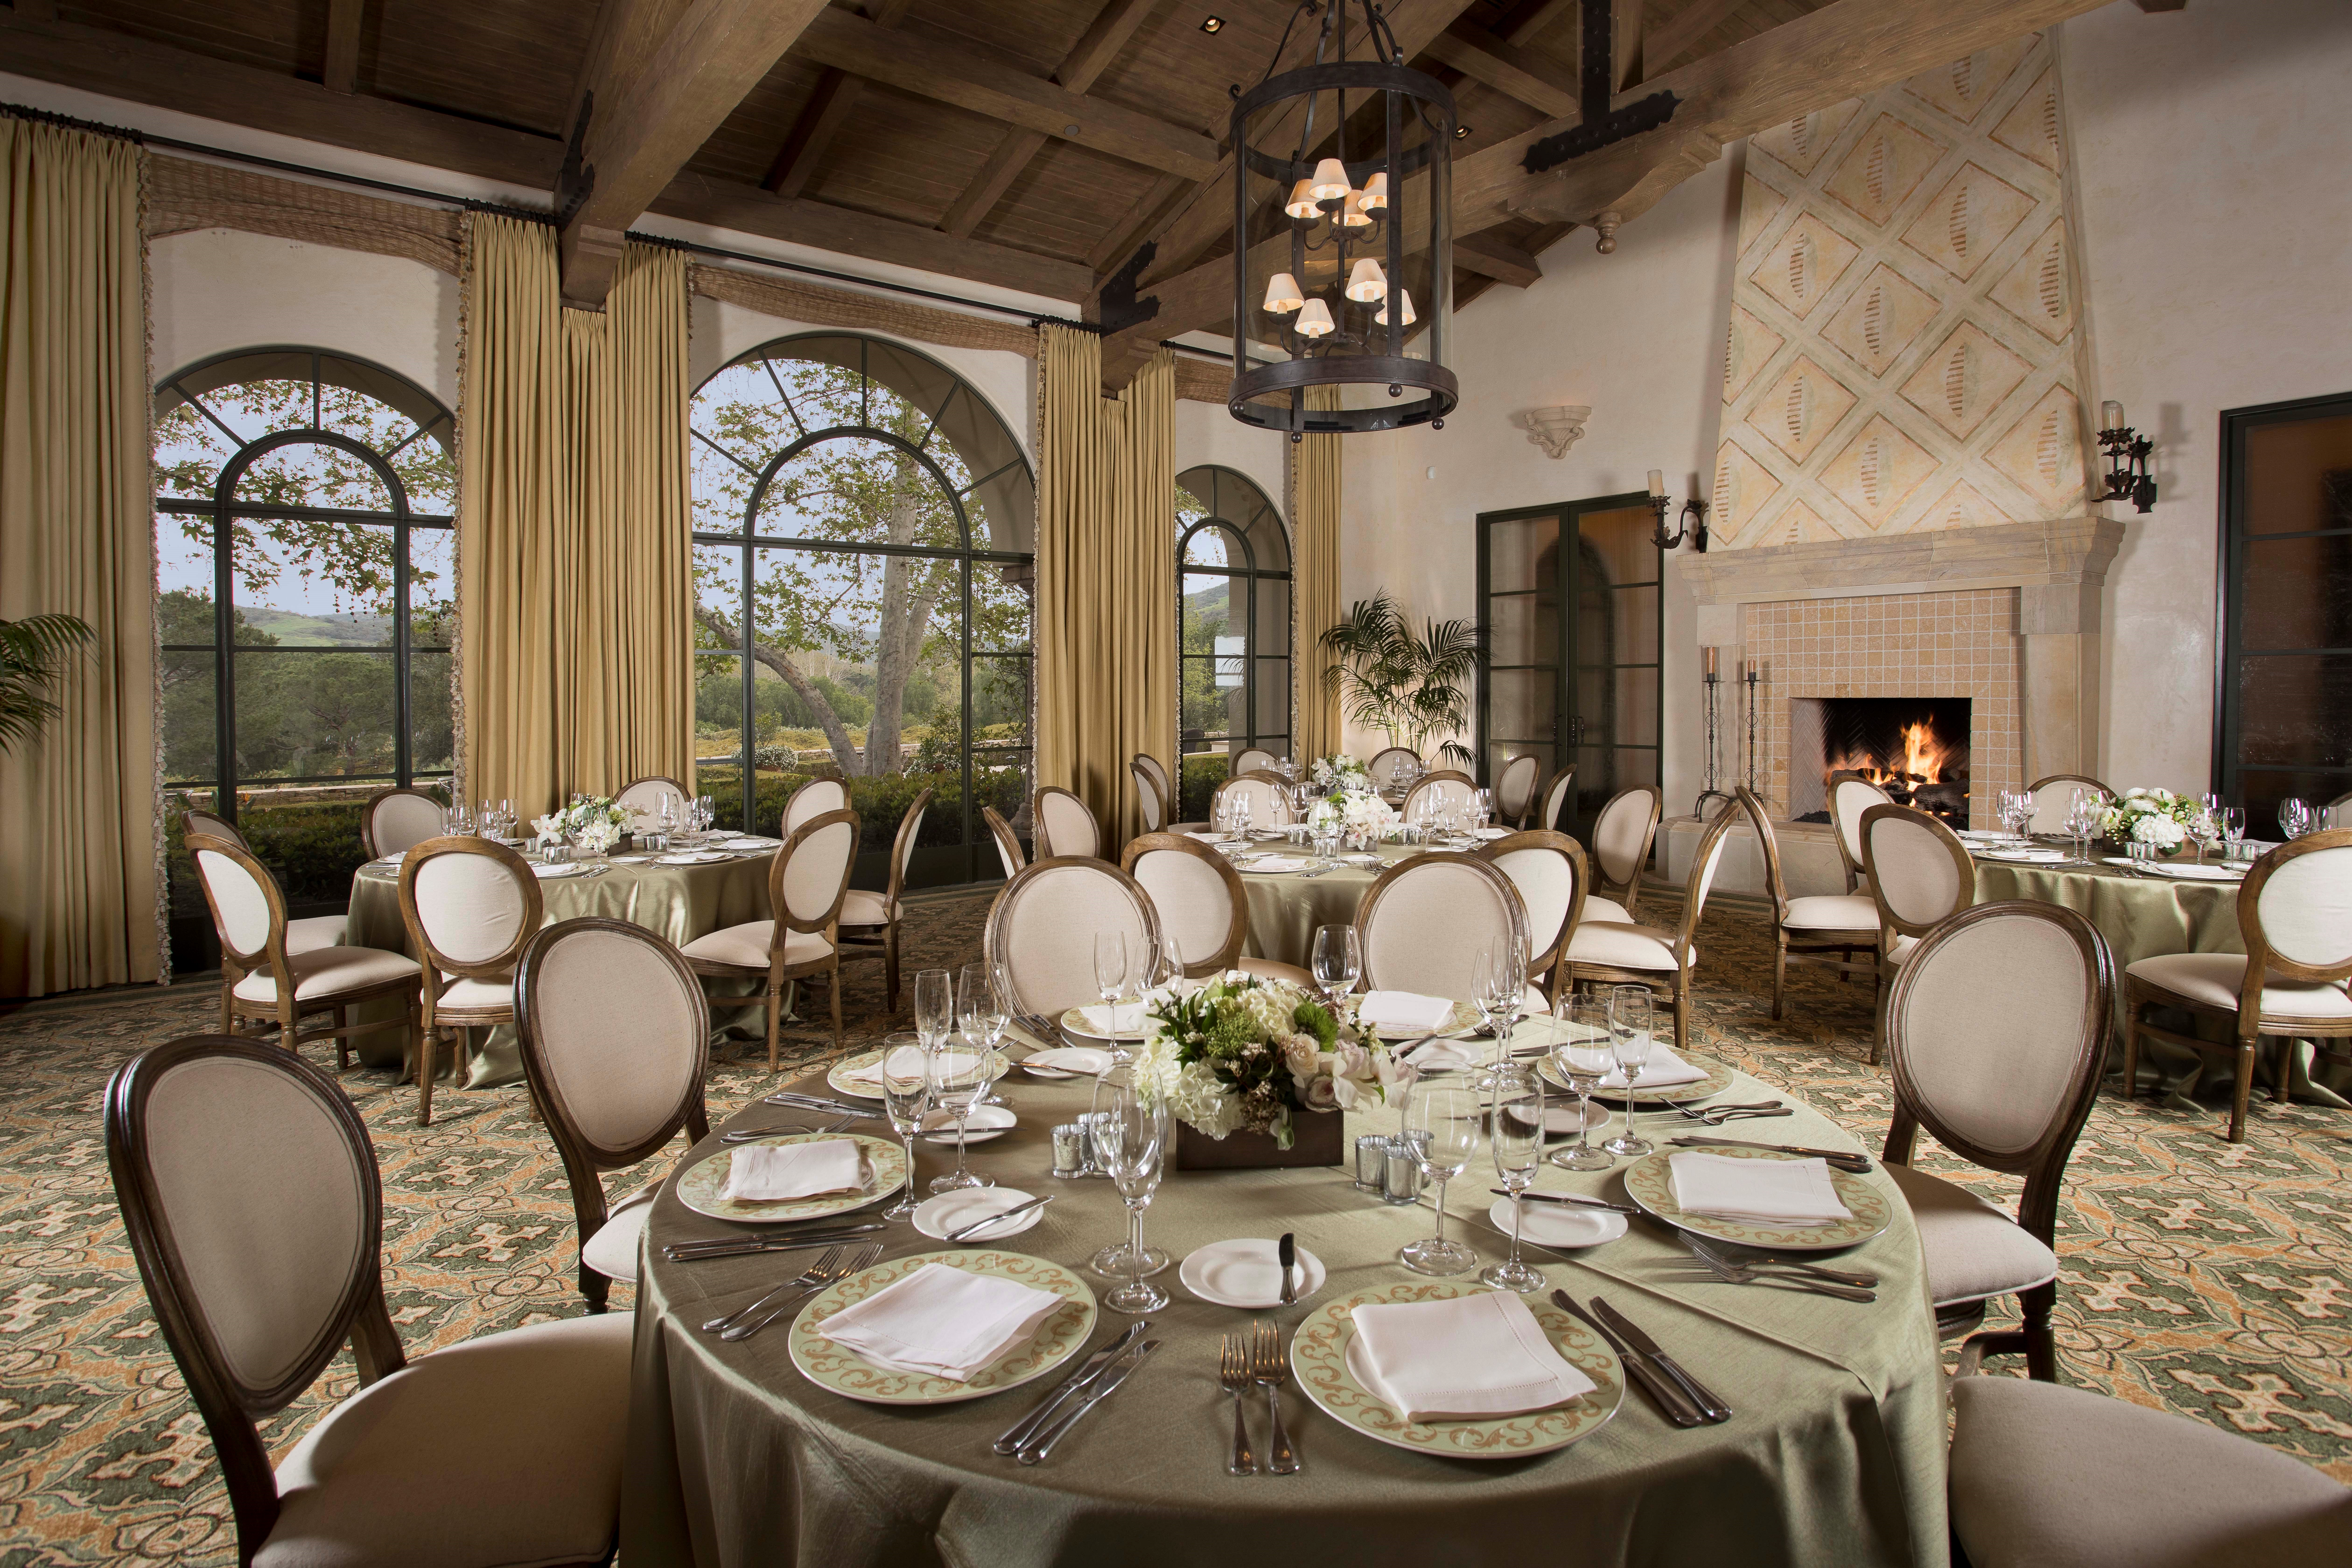 Executive Chef, Shady Canyon Golf Club, Irvine, CA - Meyers and Associates,  Inc